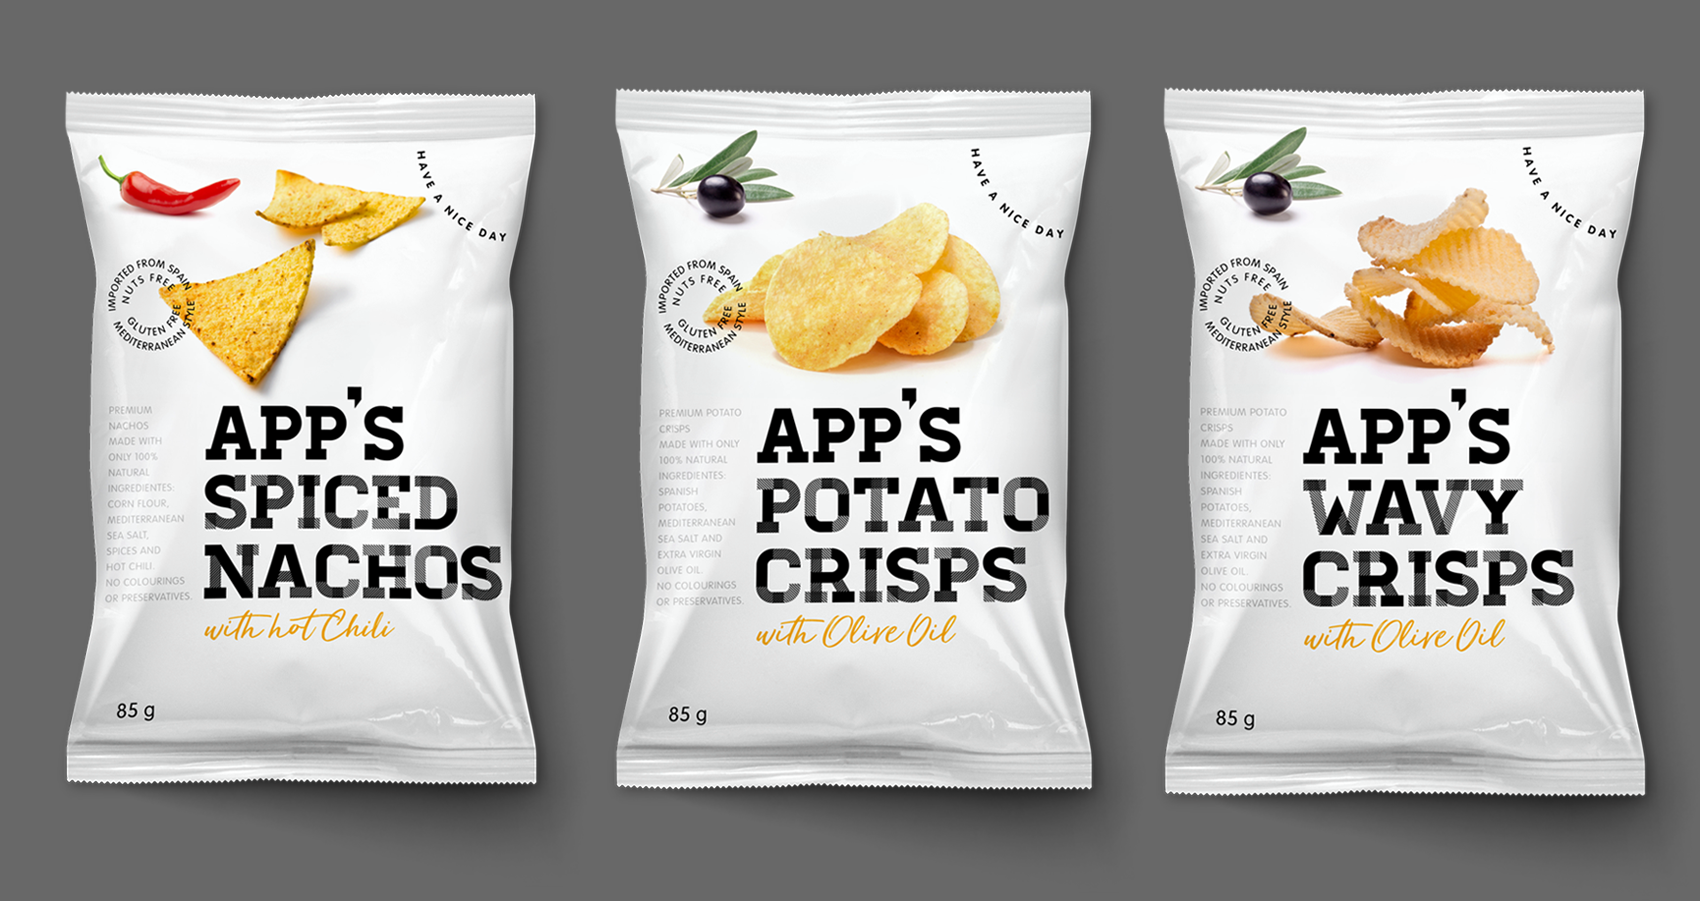 App's Diseño Packaging Snack Spiced Nachos Potato Crisps Wavy Crisps